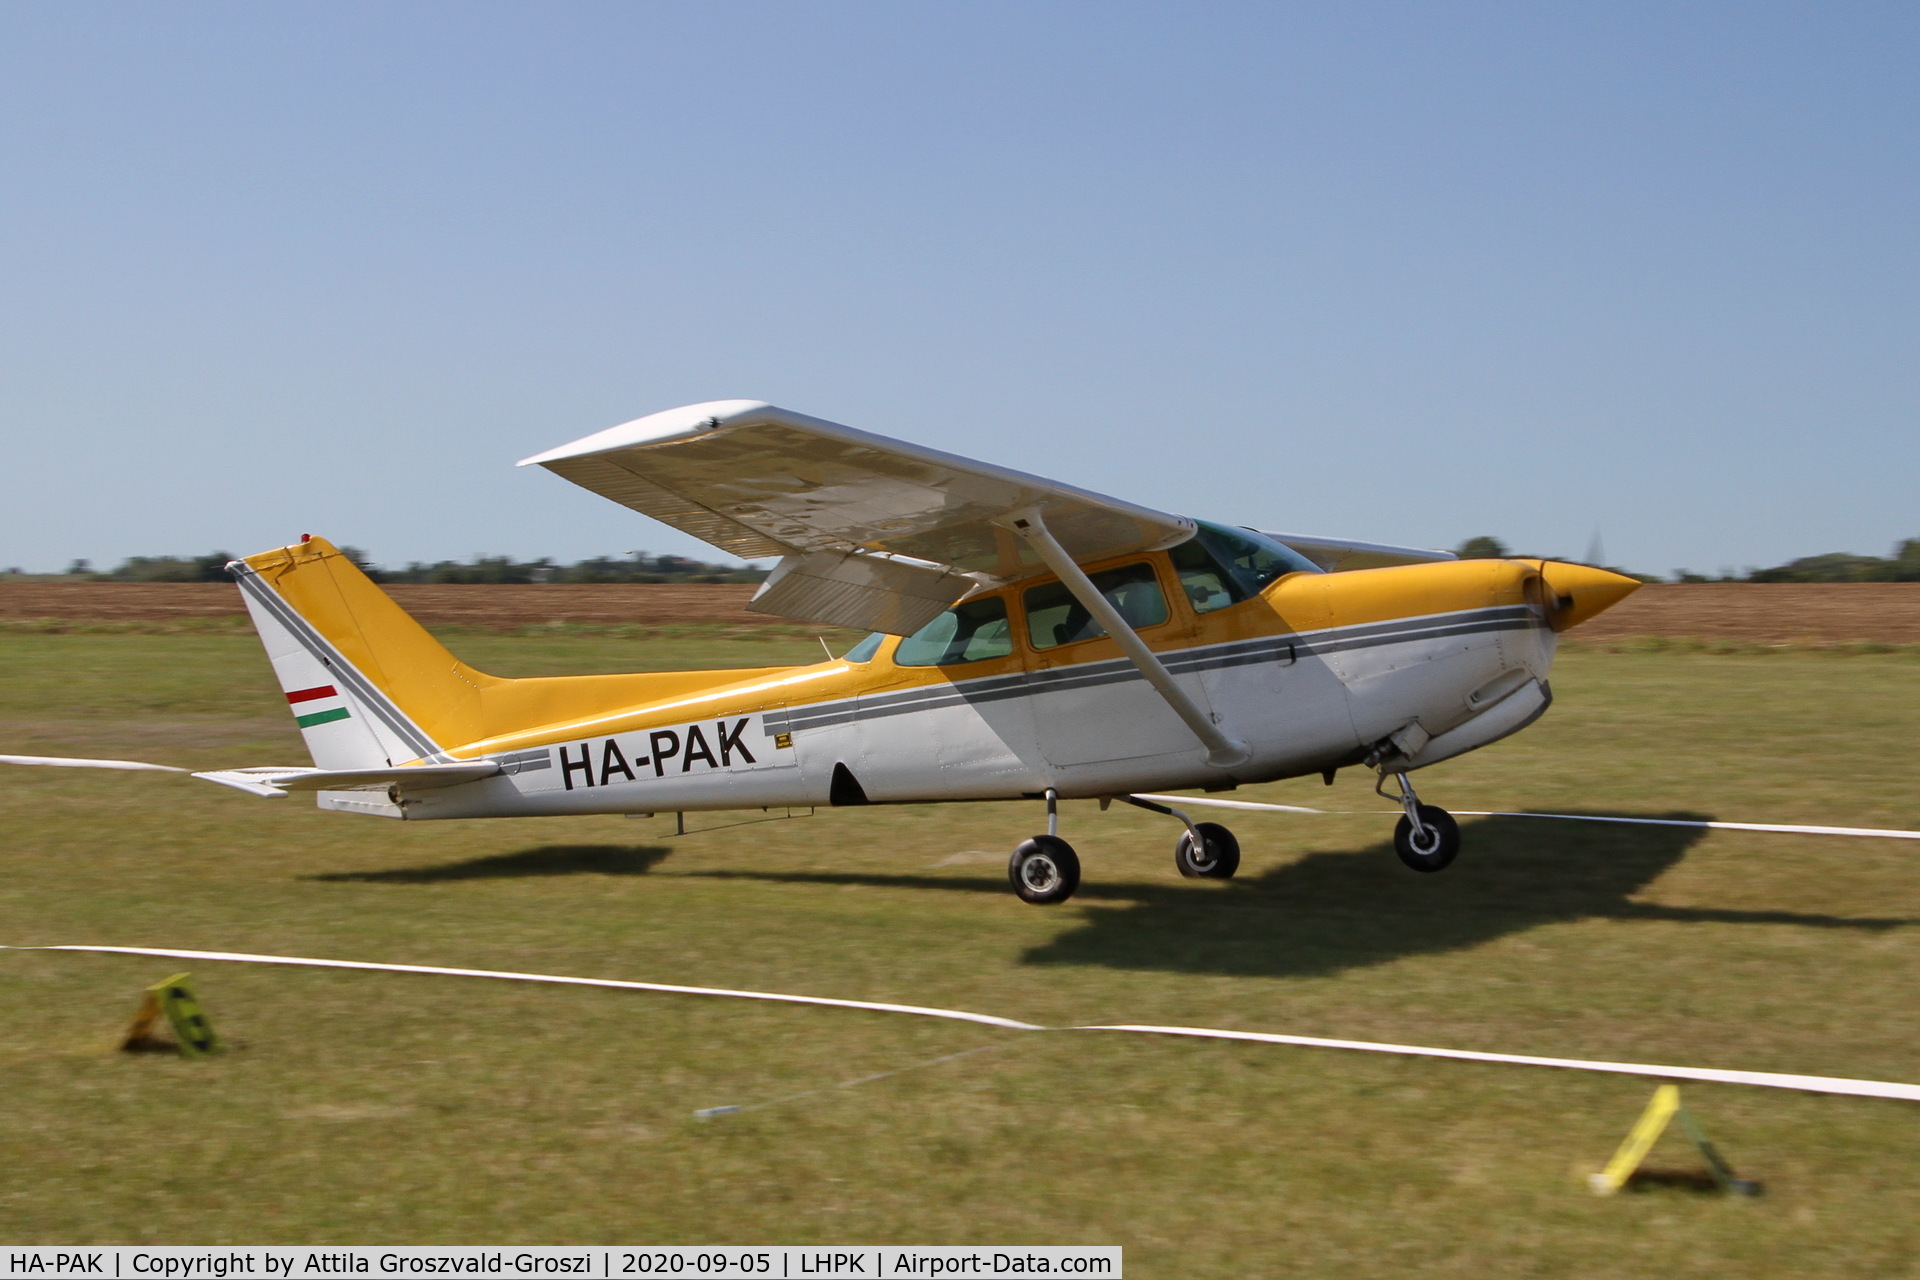 HA-PAK, 1980 Cessna 172RG Cutlass RG C/N 172RG-0375, LHPK - Papkutapuszta Airfield, Hungary